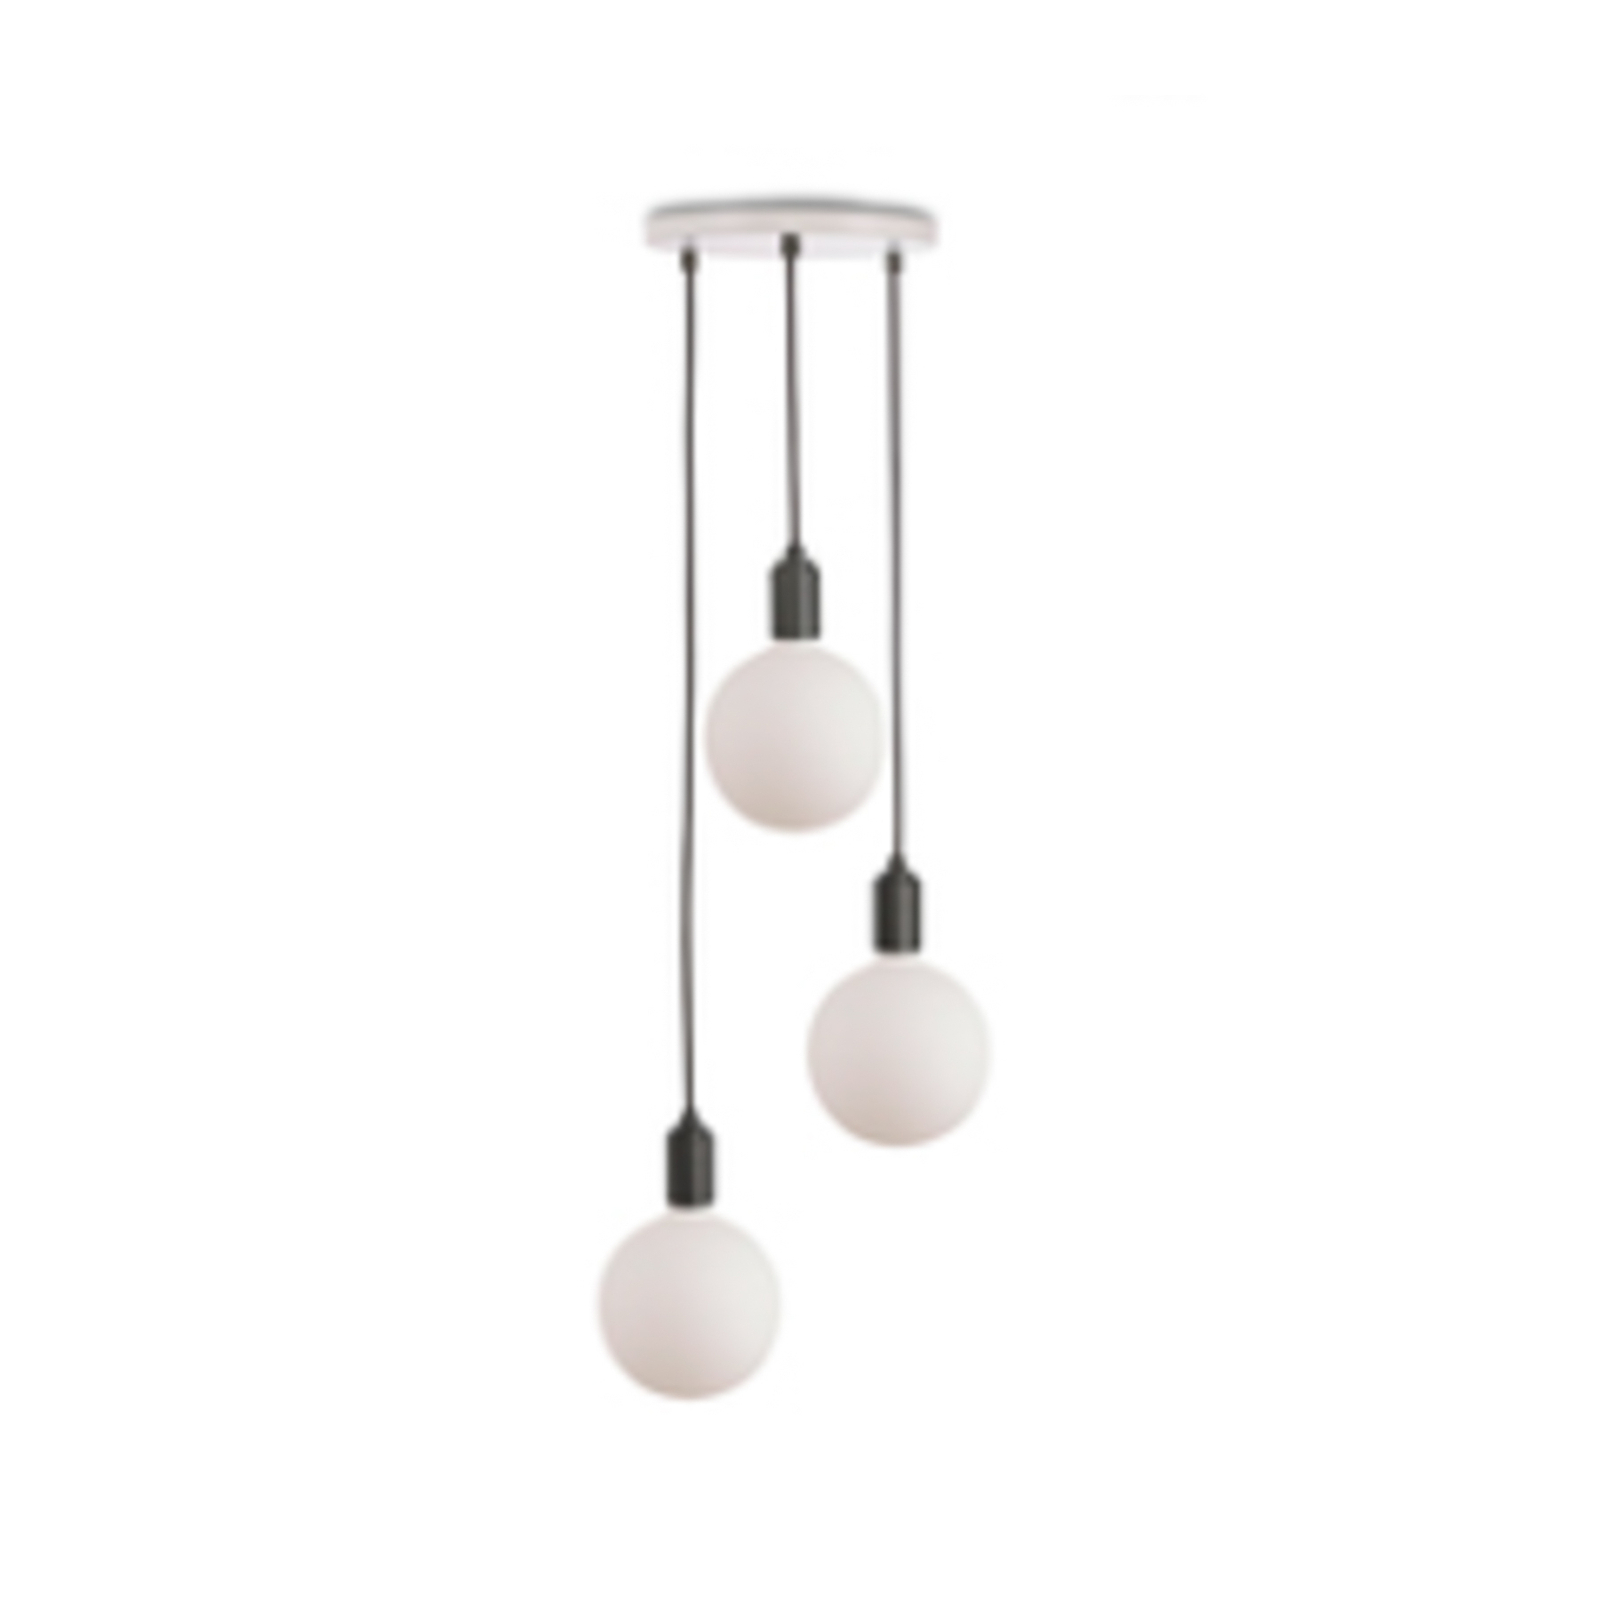 Tala hanglamp Triple Pendant rond, E27 opaal, wit/grafiet